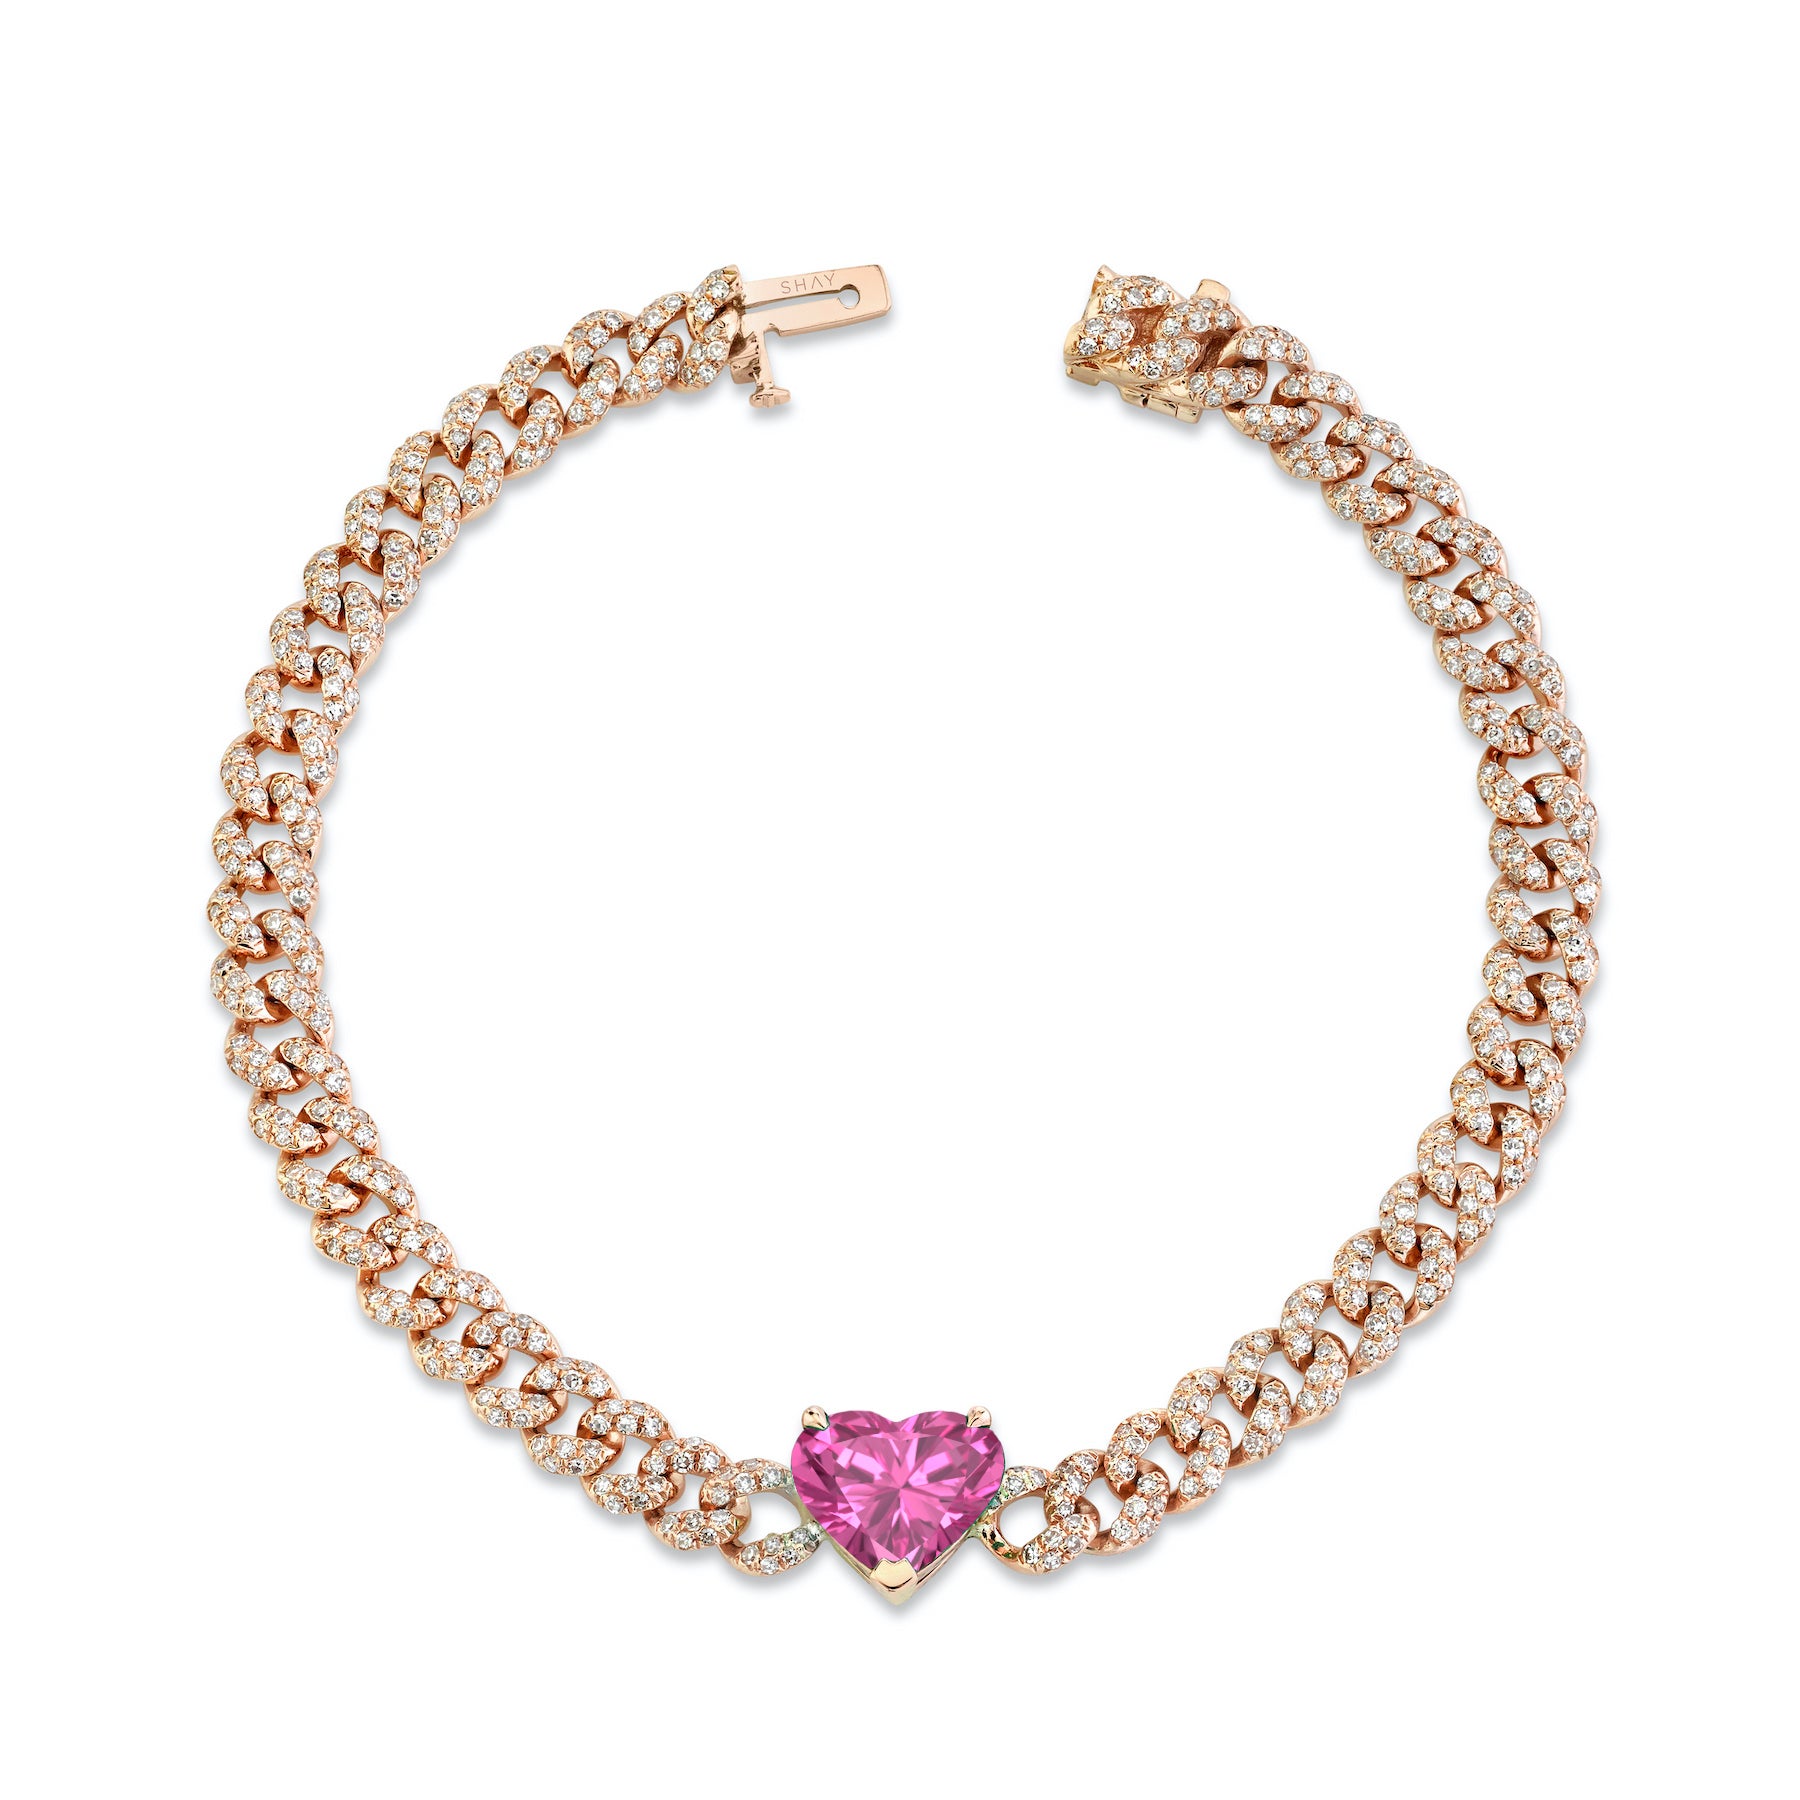 Gold Pave Heart Bracelet Pink String